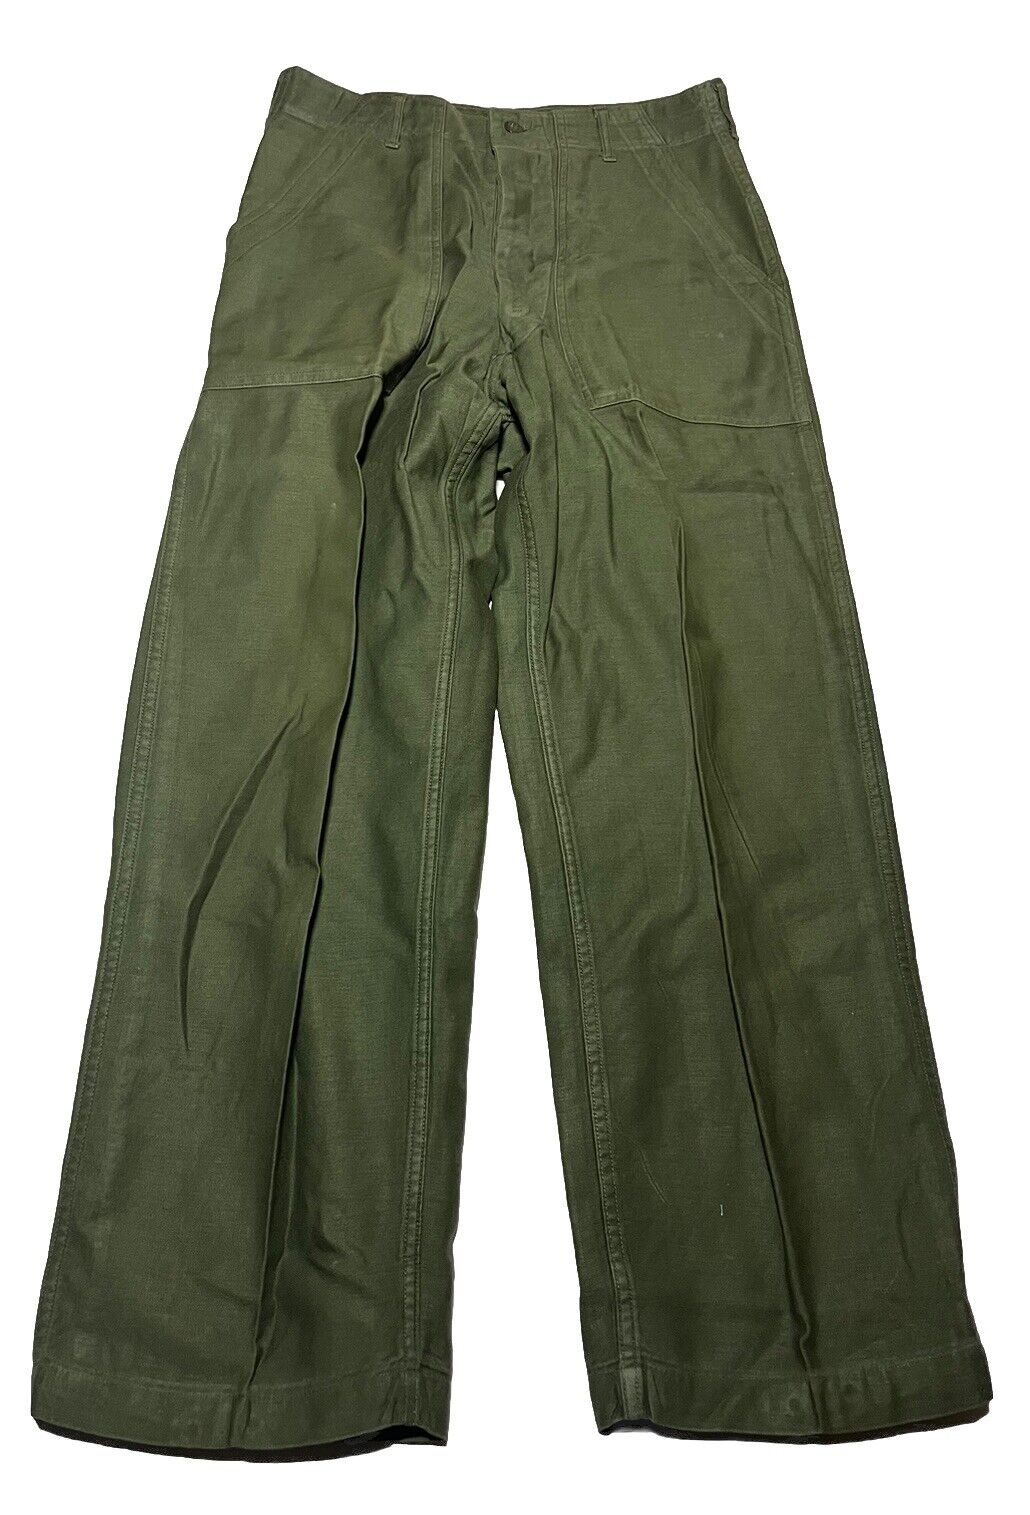 Vintage 60s Vietnam OG 107 Military Trouser Pants Sateen Green 30x29 AM6